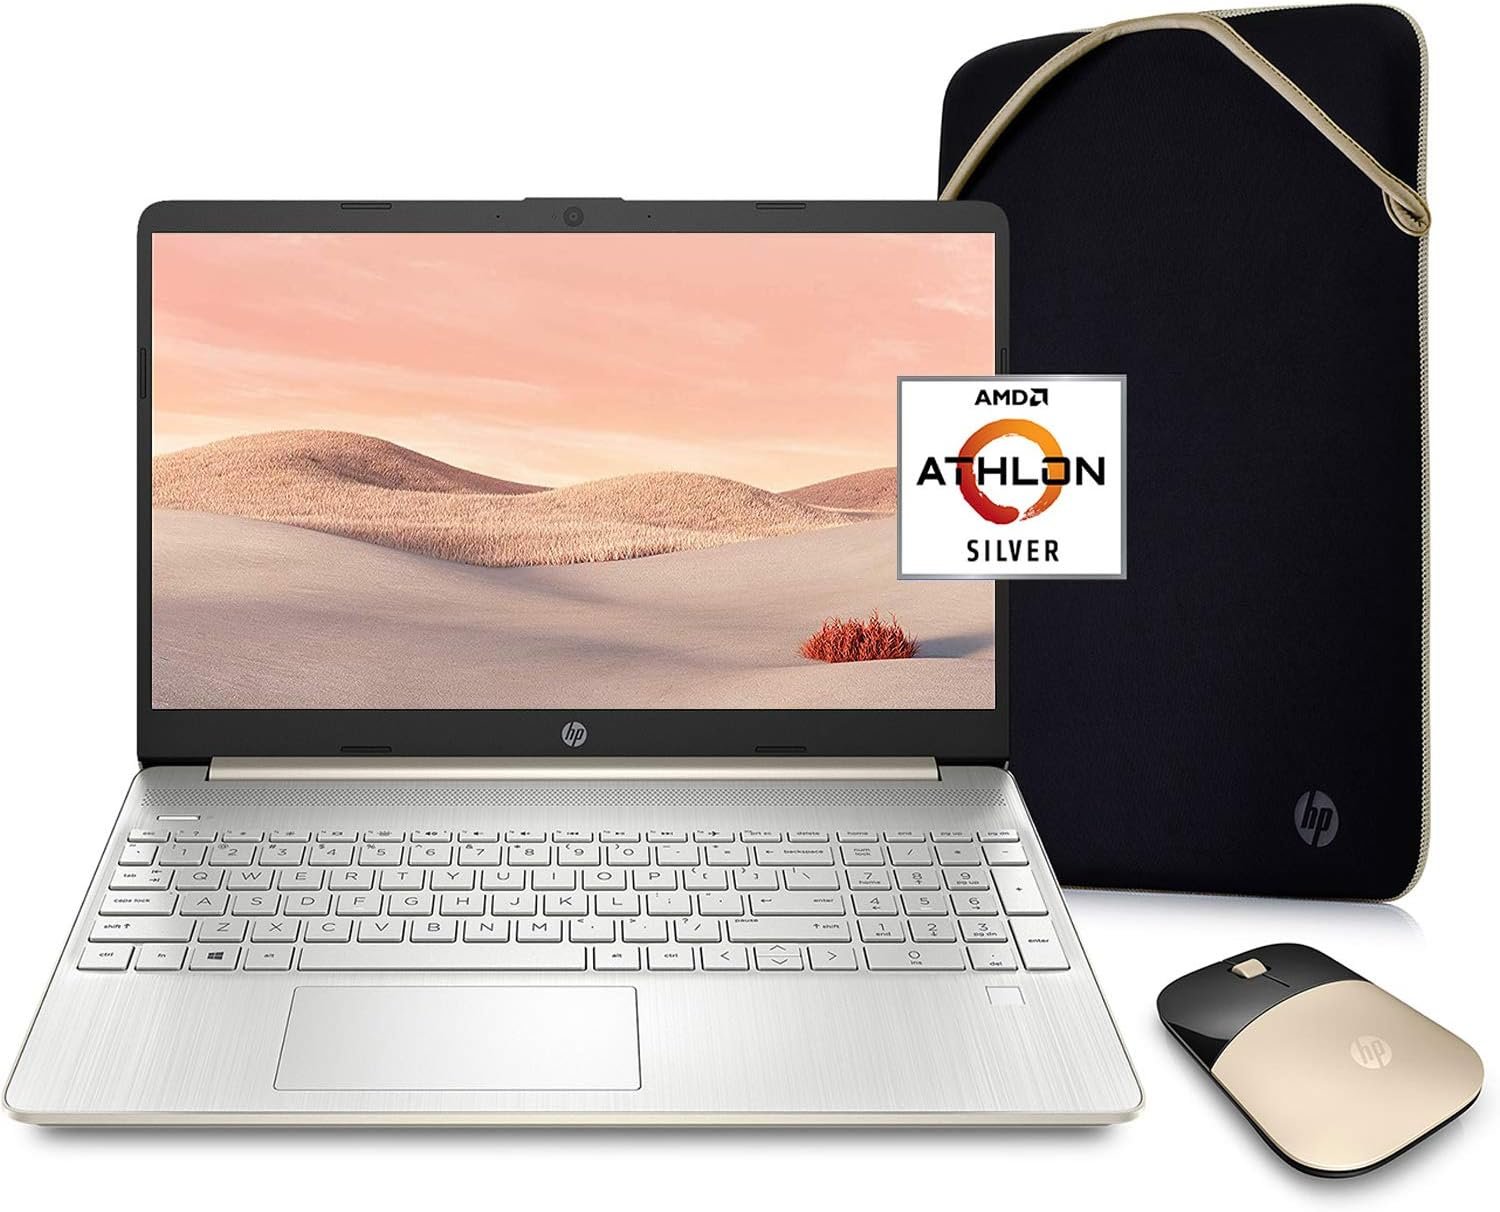 HP Pavilion Laptop (2021 Latest Model)